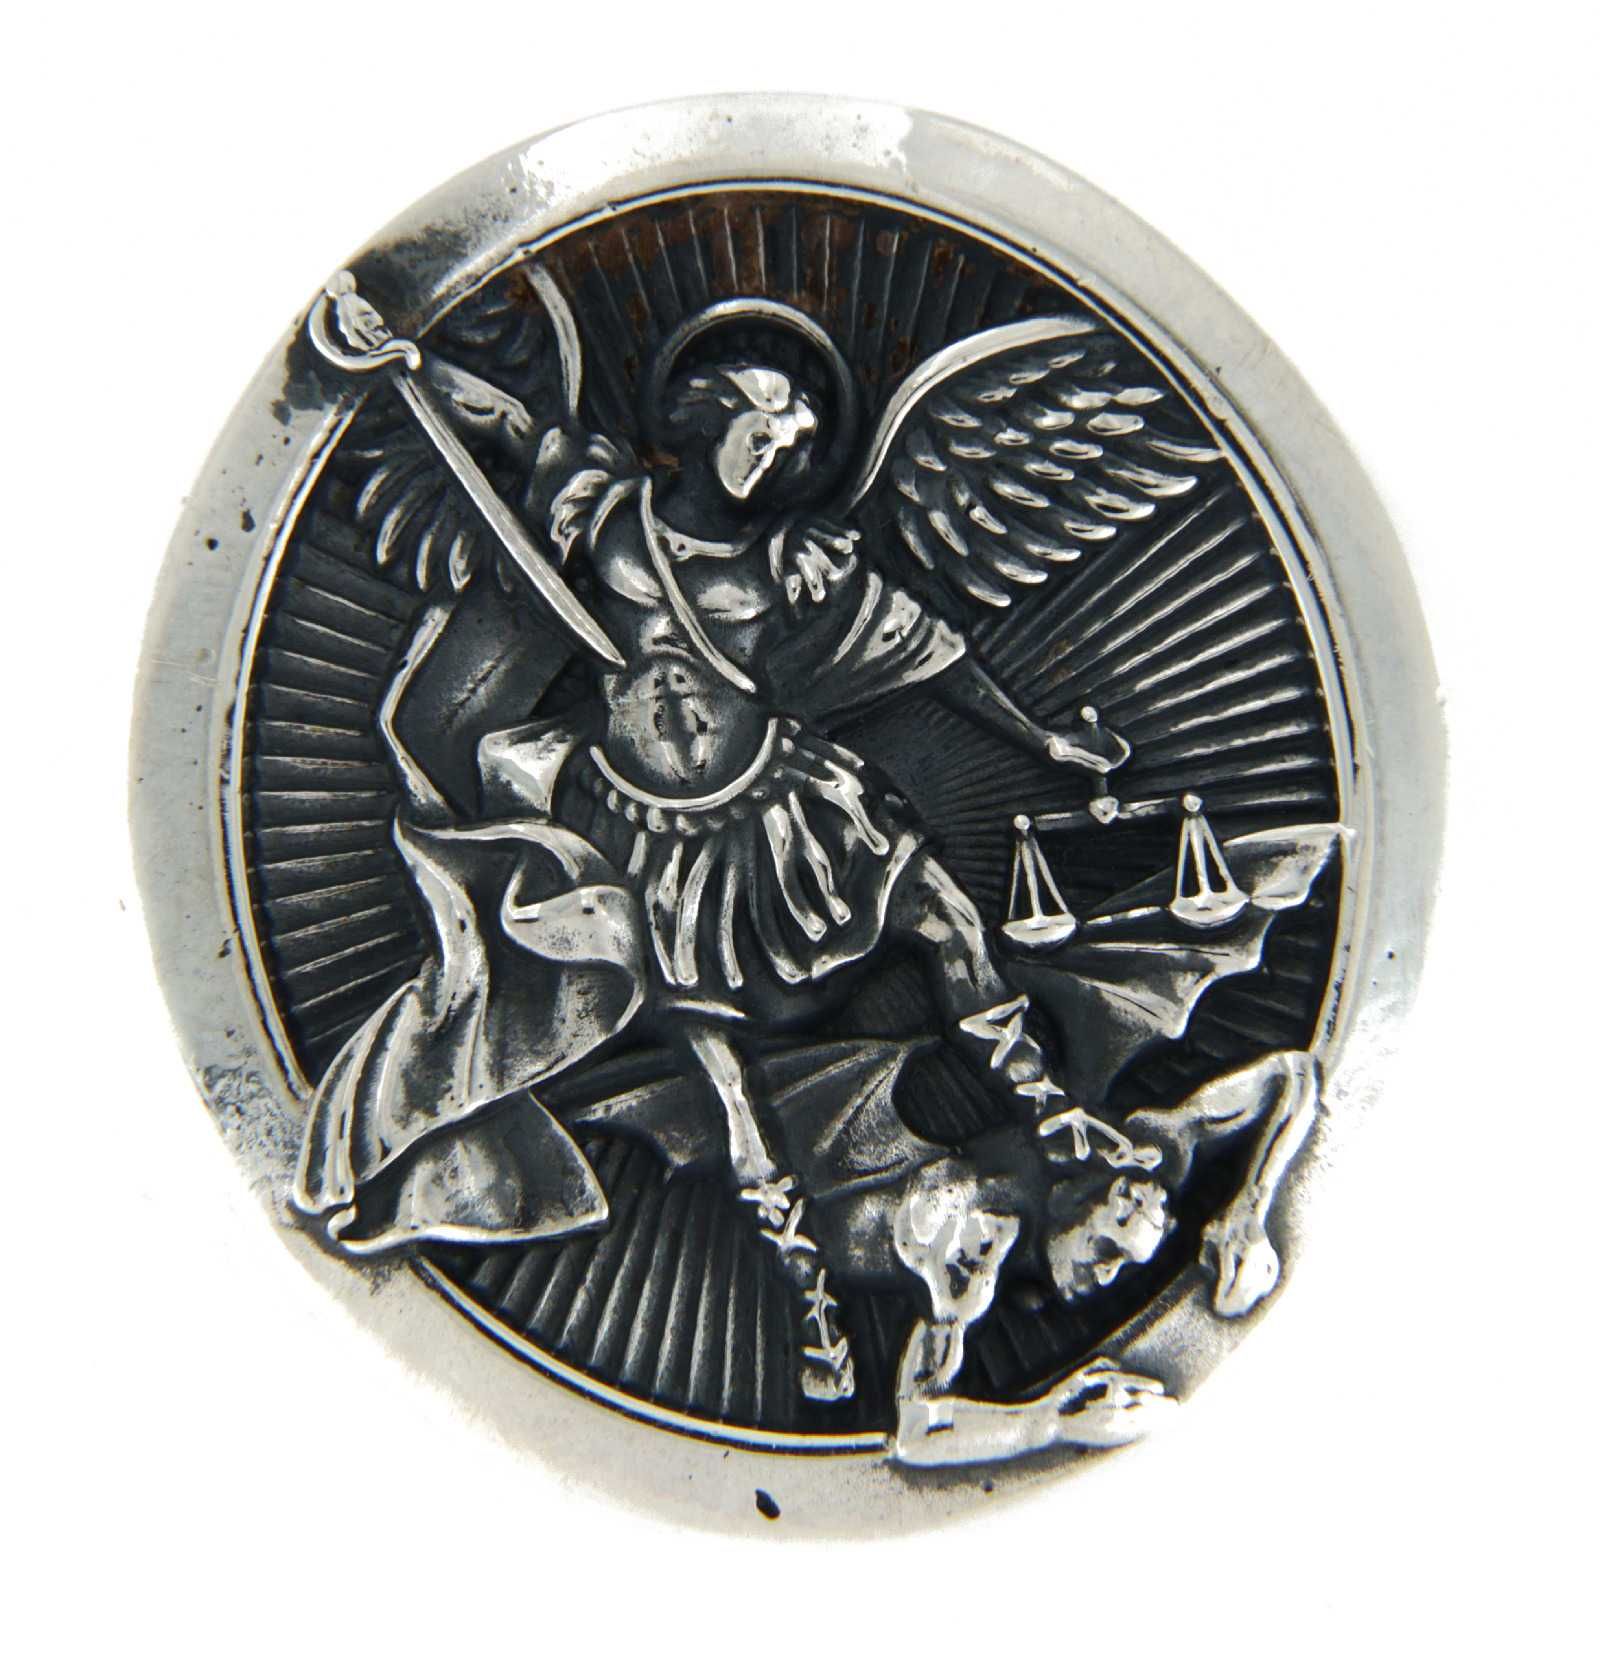 Inel ghiul argint 925 Arhanghelul Mihail